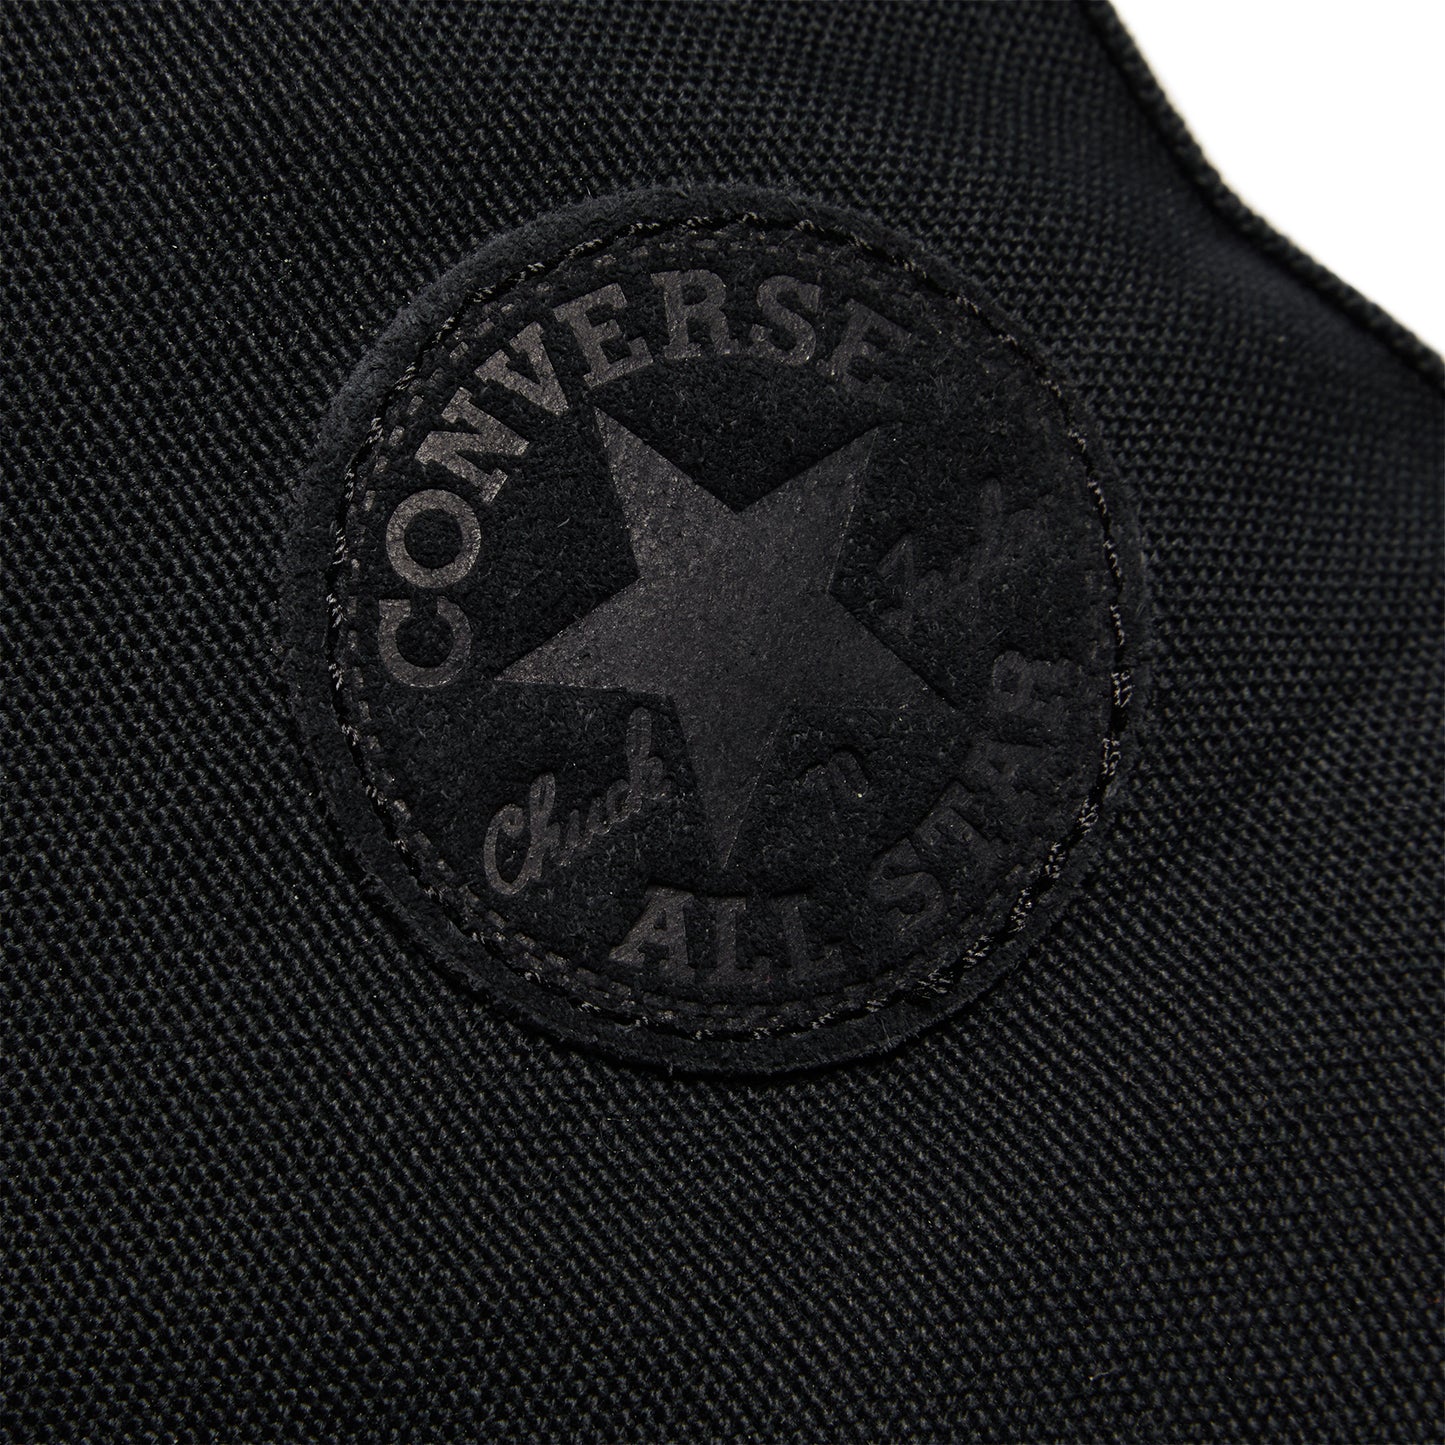 Converse x Turnstile Chuck 70 Hi (Black/Grey/White)